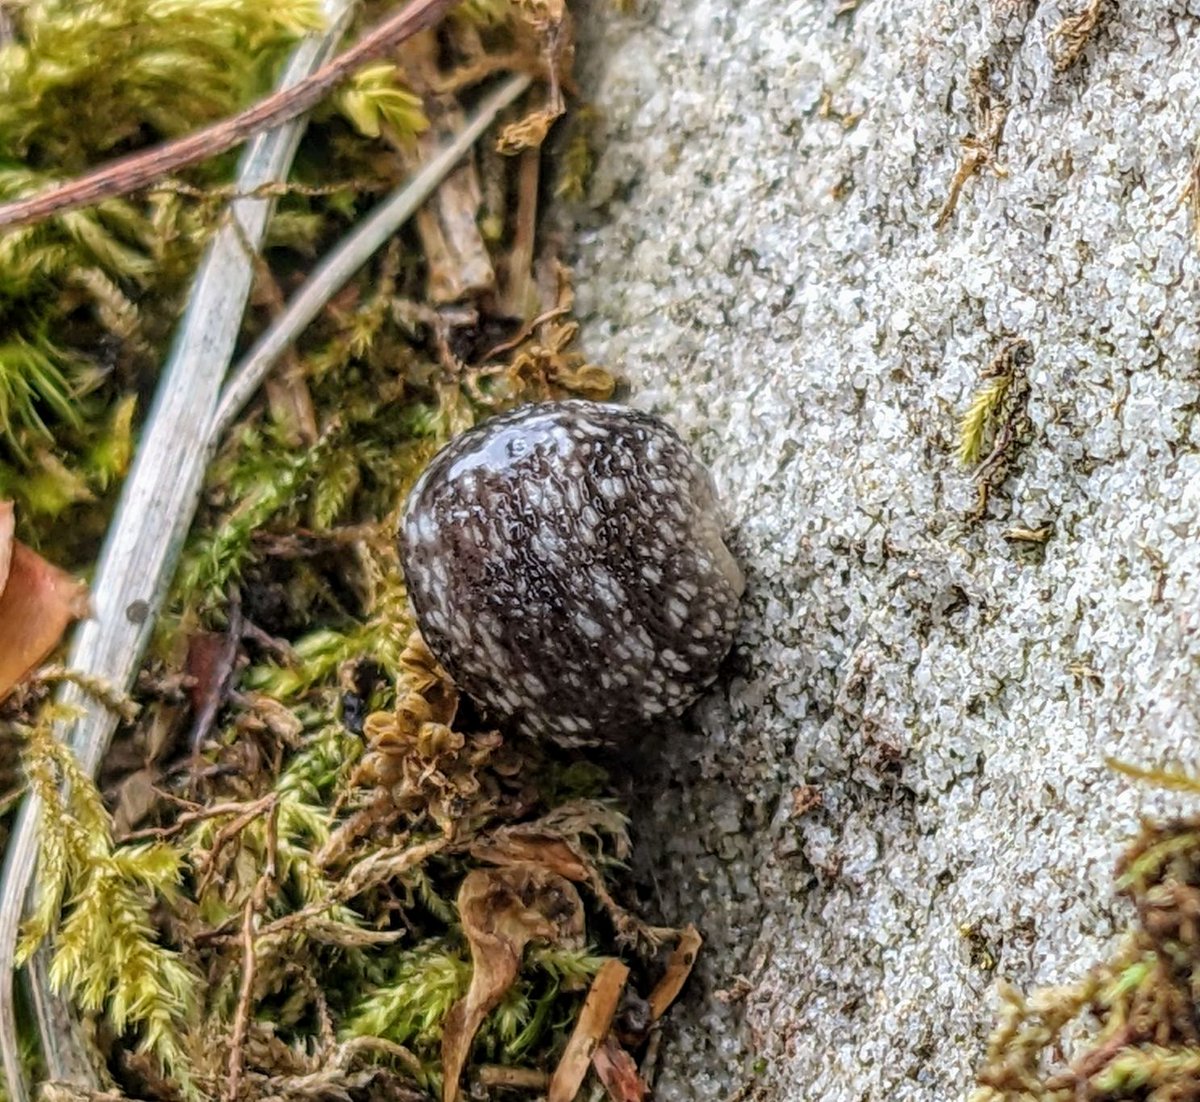 The cutest little ball of baby Kerry slug (Geomalacus maculosus) you might see today 🐌 #KillarneyNationalPark